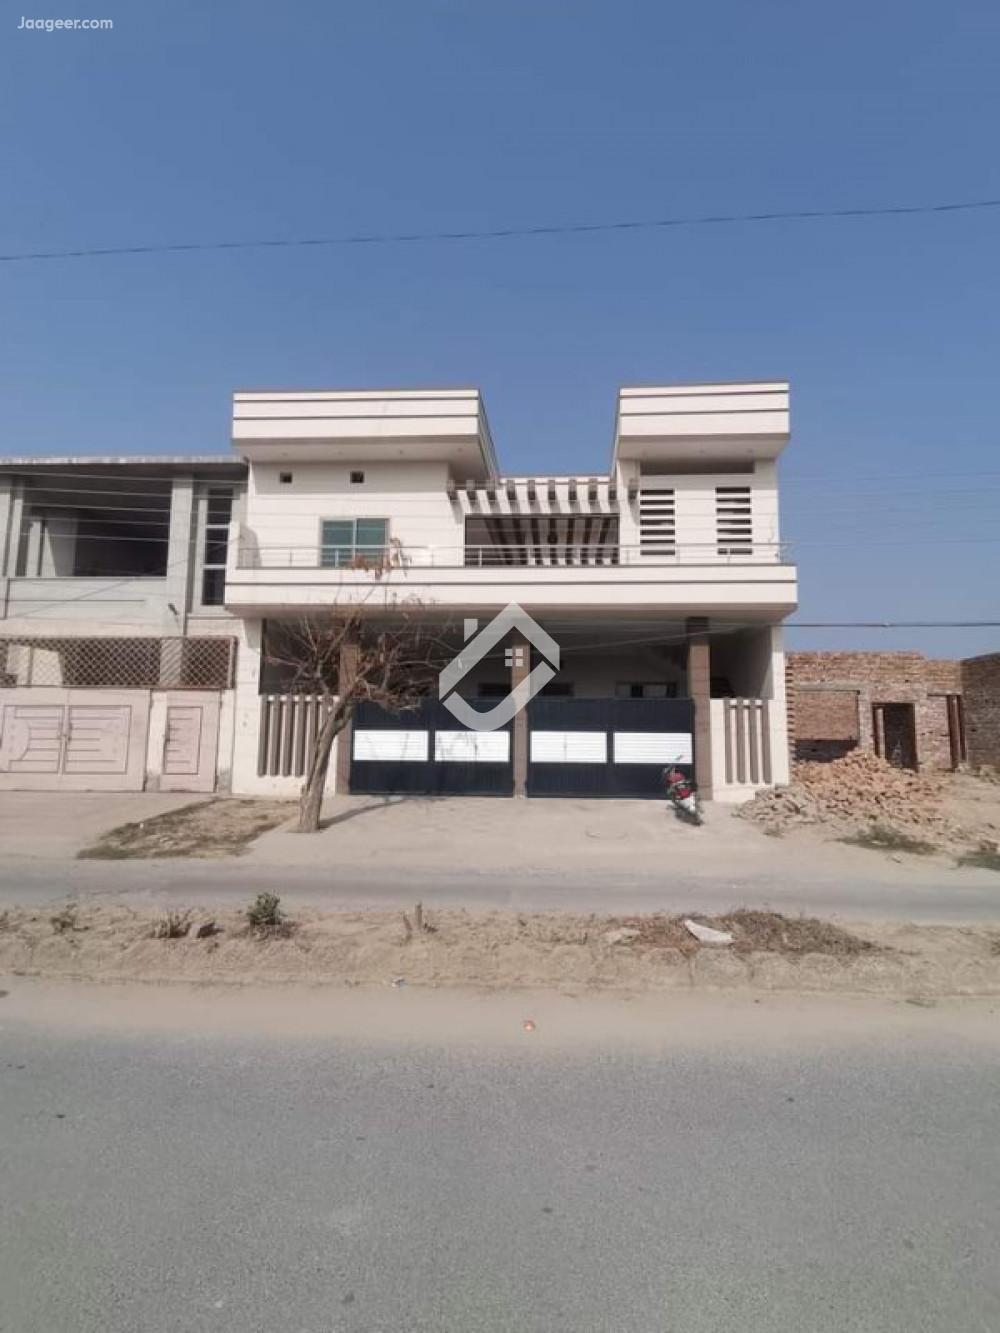 View  10 Marla Double Storey House For Sale In Shadman City Phase 1 Near Civil Hospital  in Shadman City, Bahawalpur